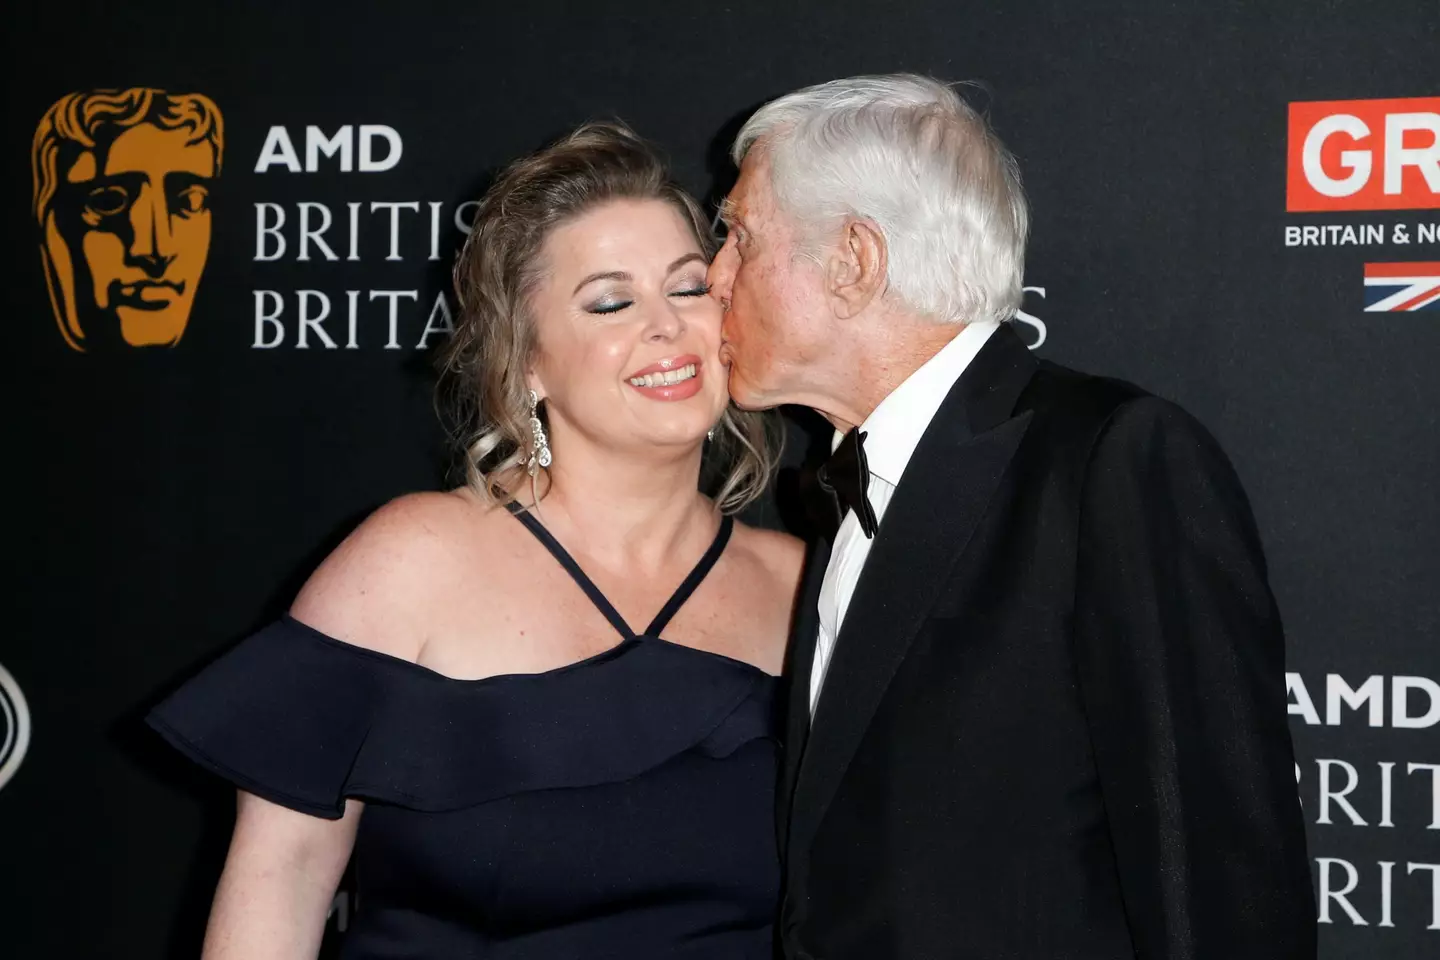 Dick Van Dyke and Arlene Silver at the AMD British Academy Britannia Awards.